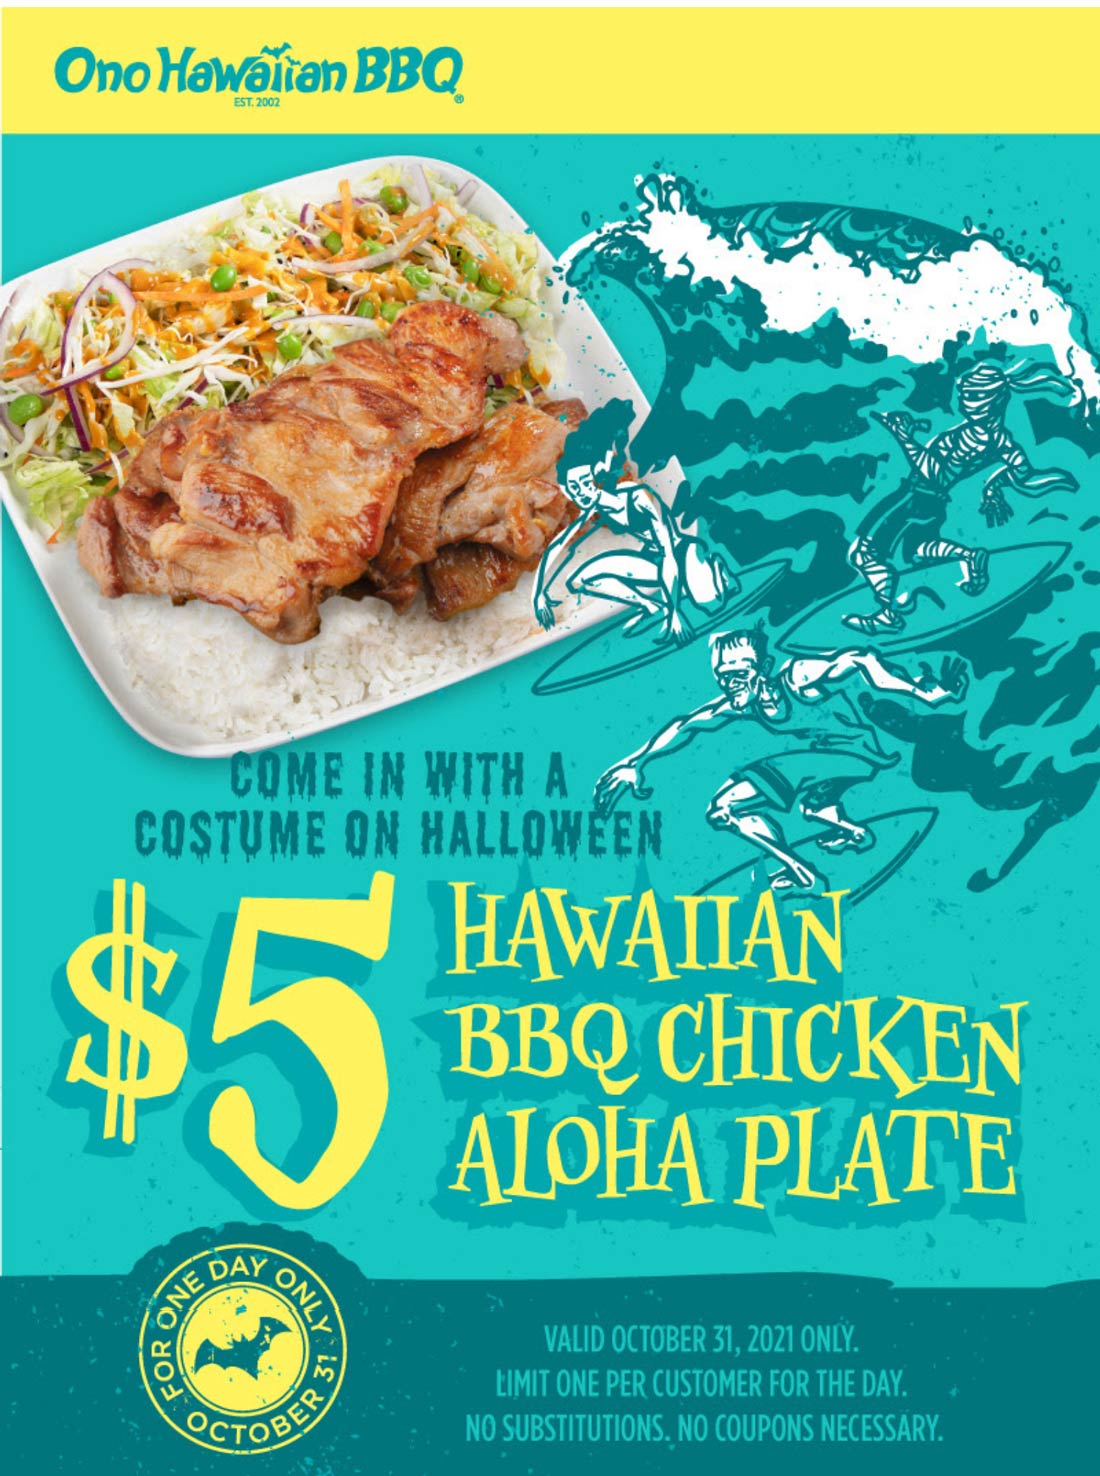 [April, 2022] 5 chicken aloha plate in costume Sunday at Ono Hawaiian